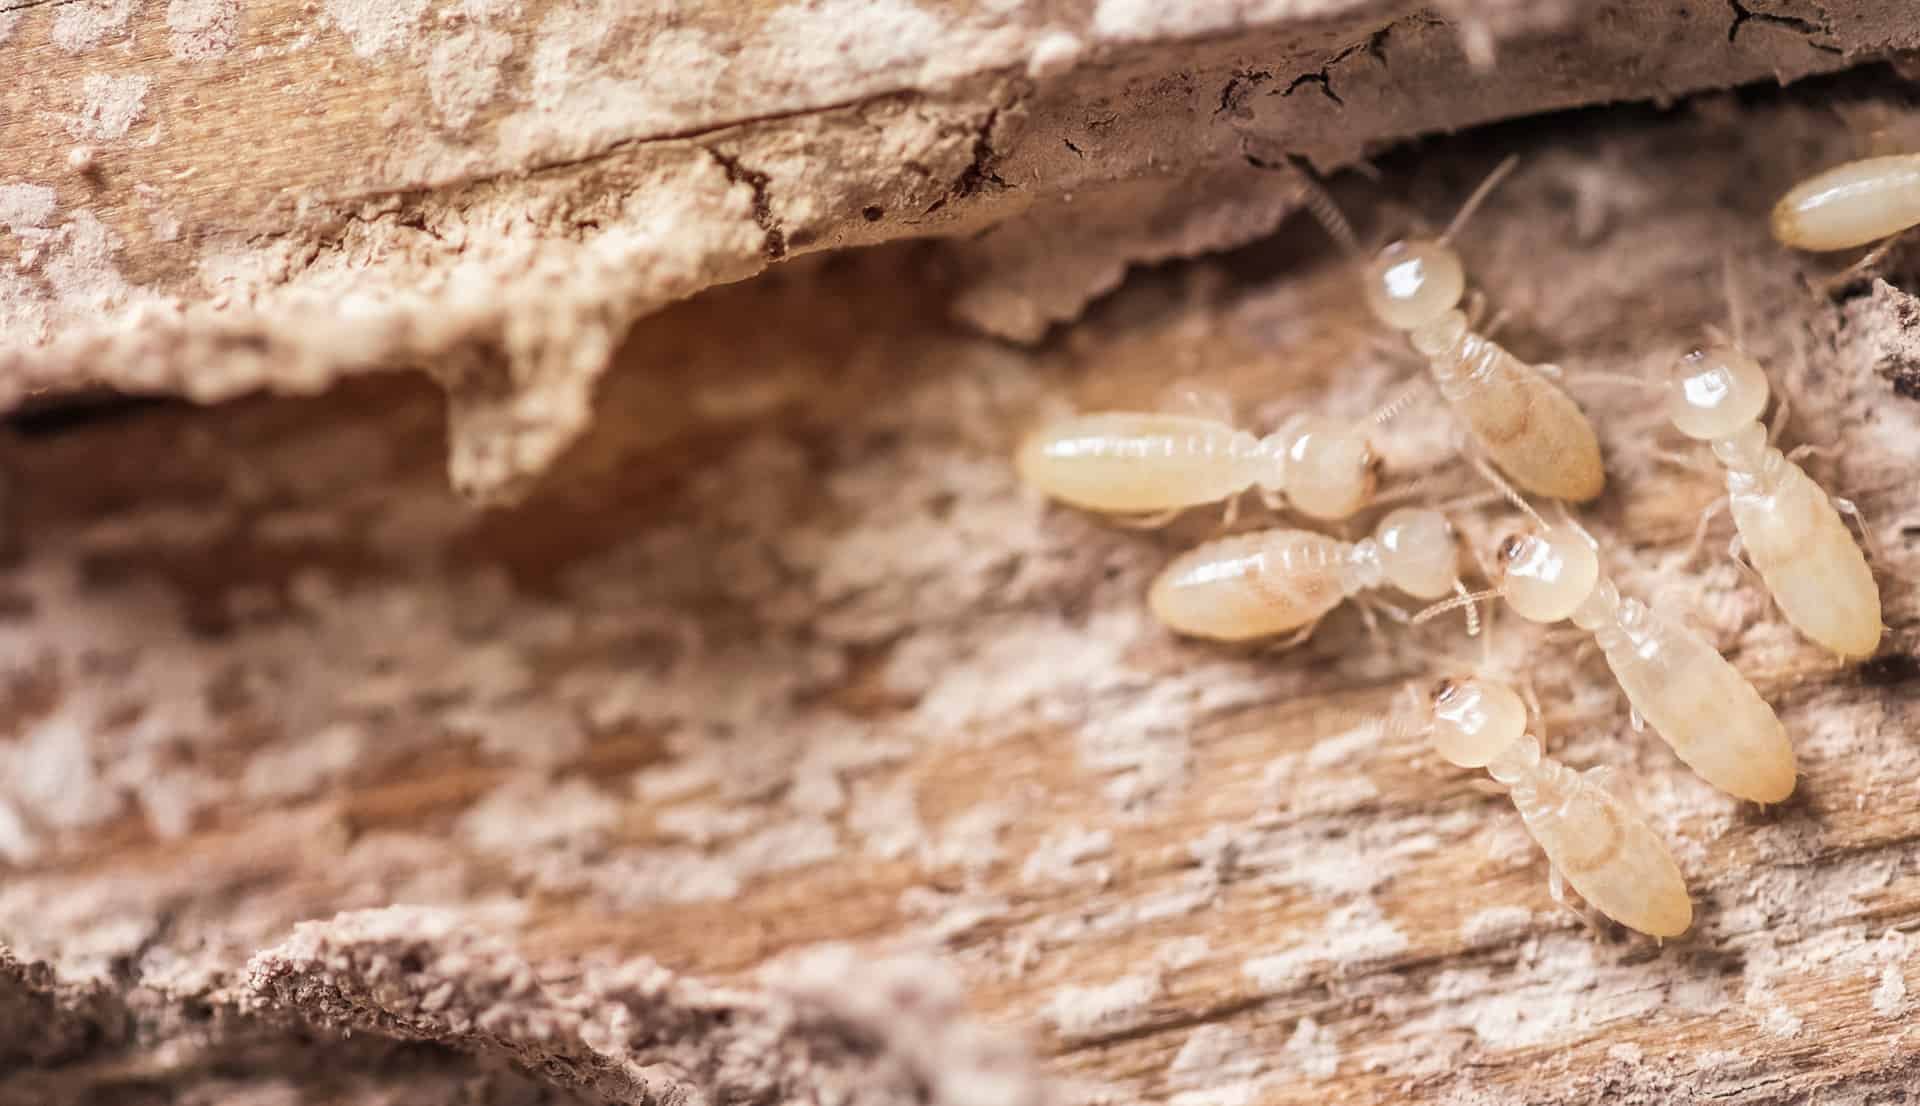 western subterranean termites